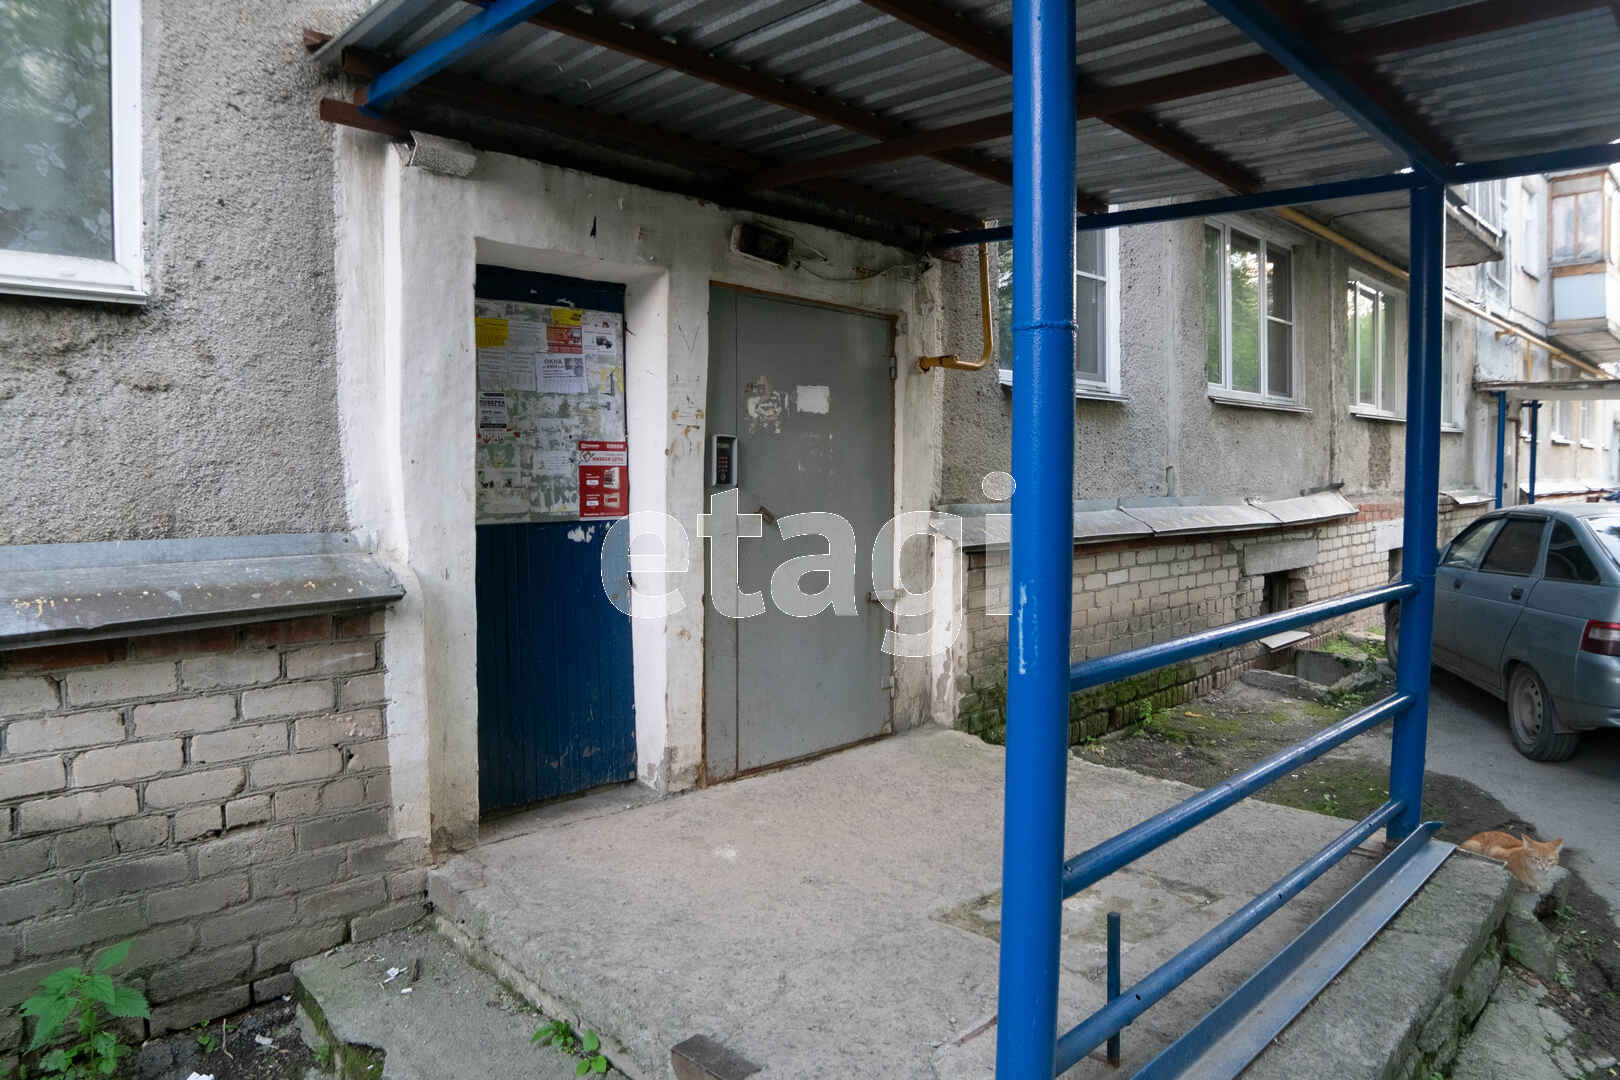 Аренда 2-комнатной квартиры, Челябинск, Челябинская область,  Златоуст